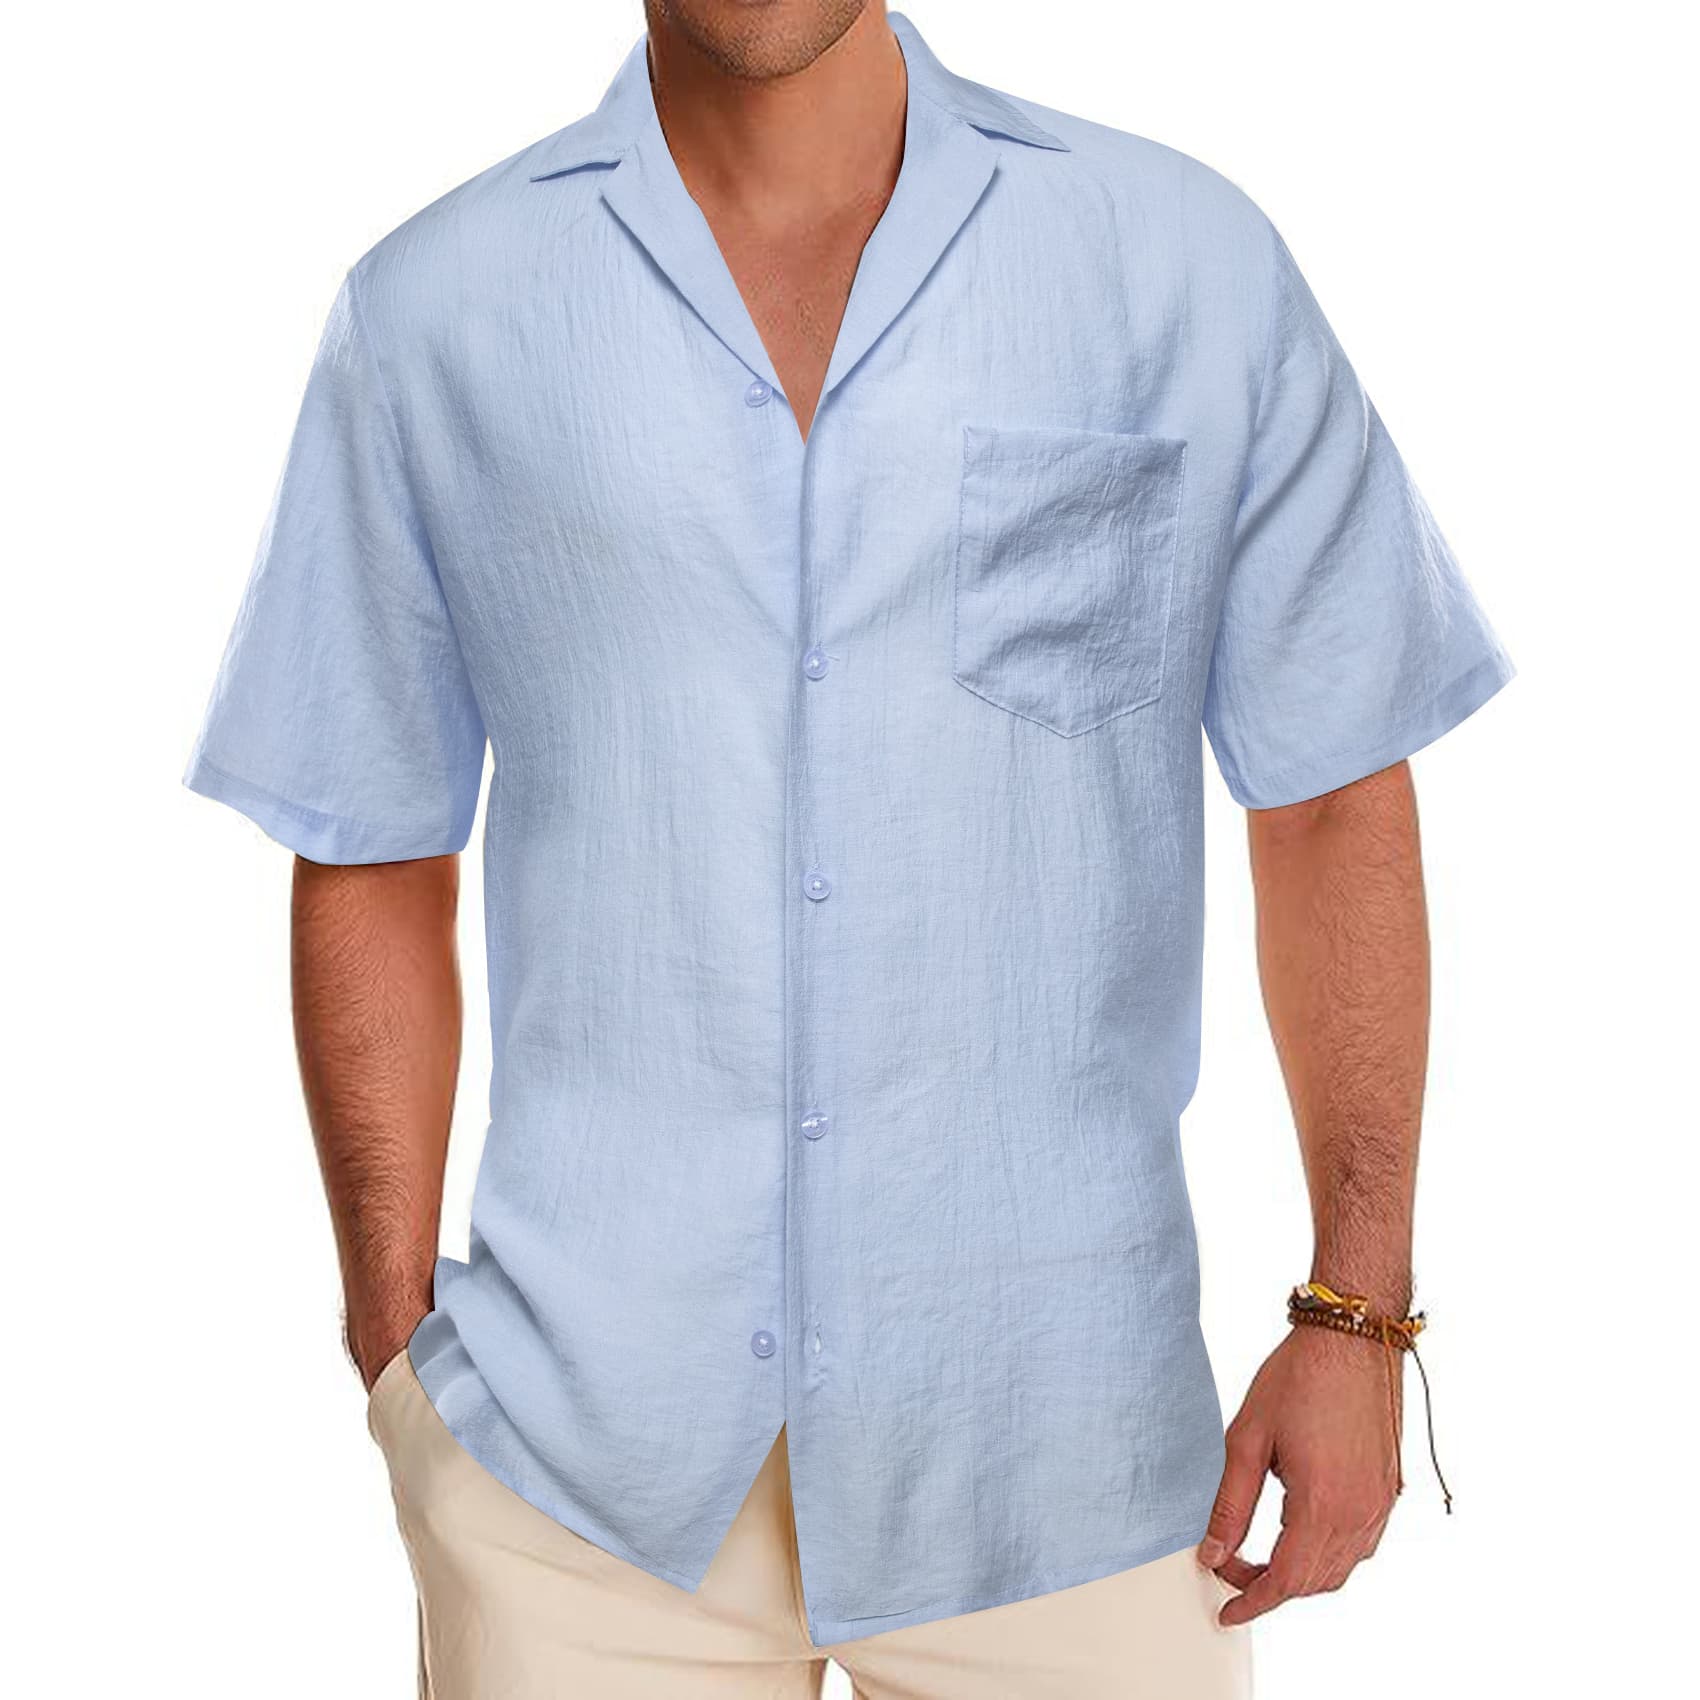 stylish shirts for men short sleeve button ups